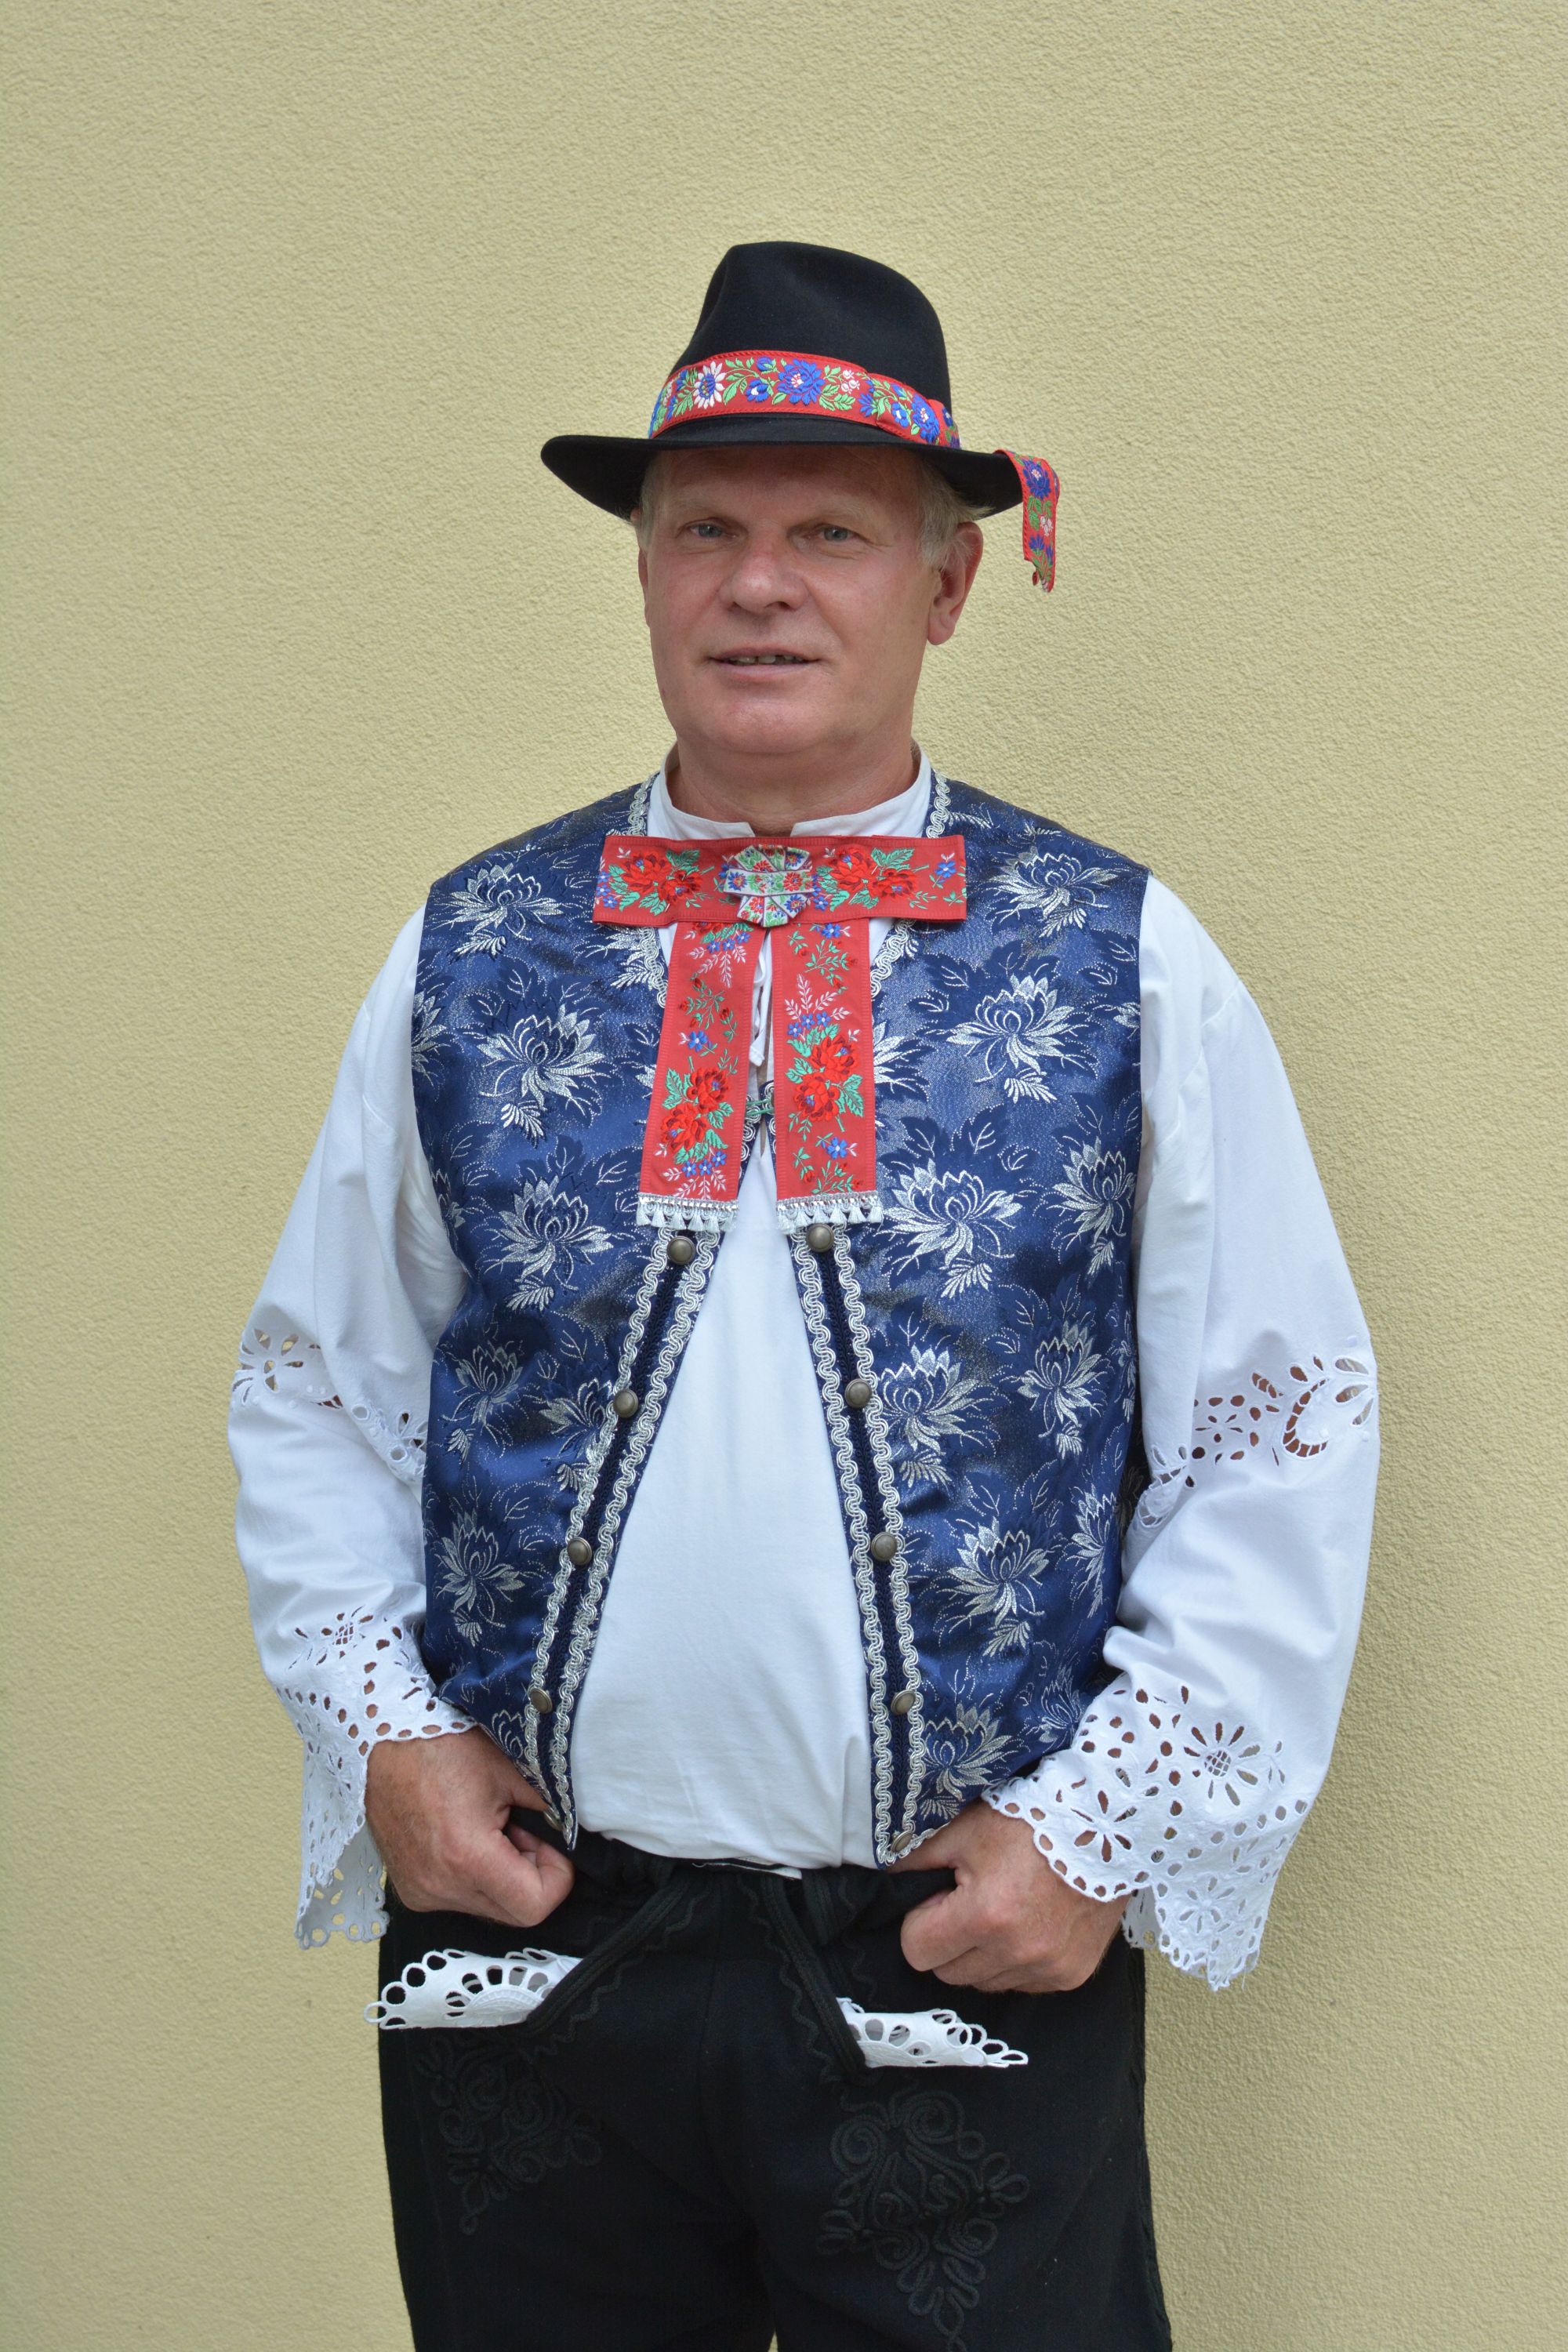 Pavol Mihalovic